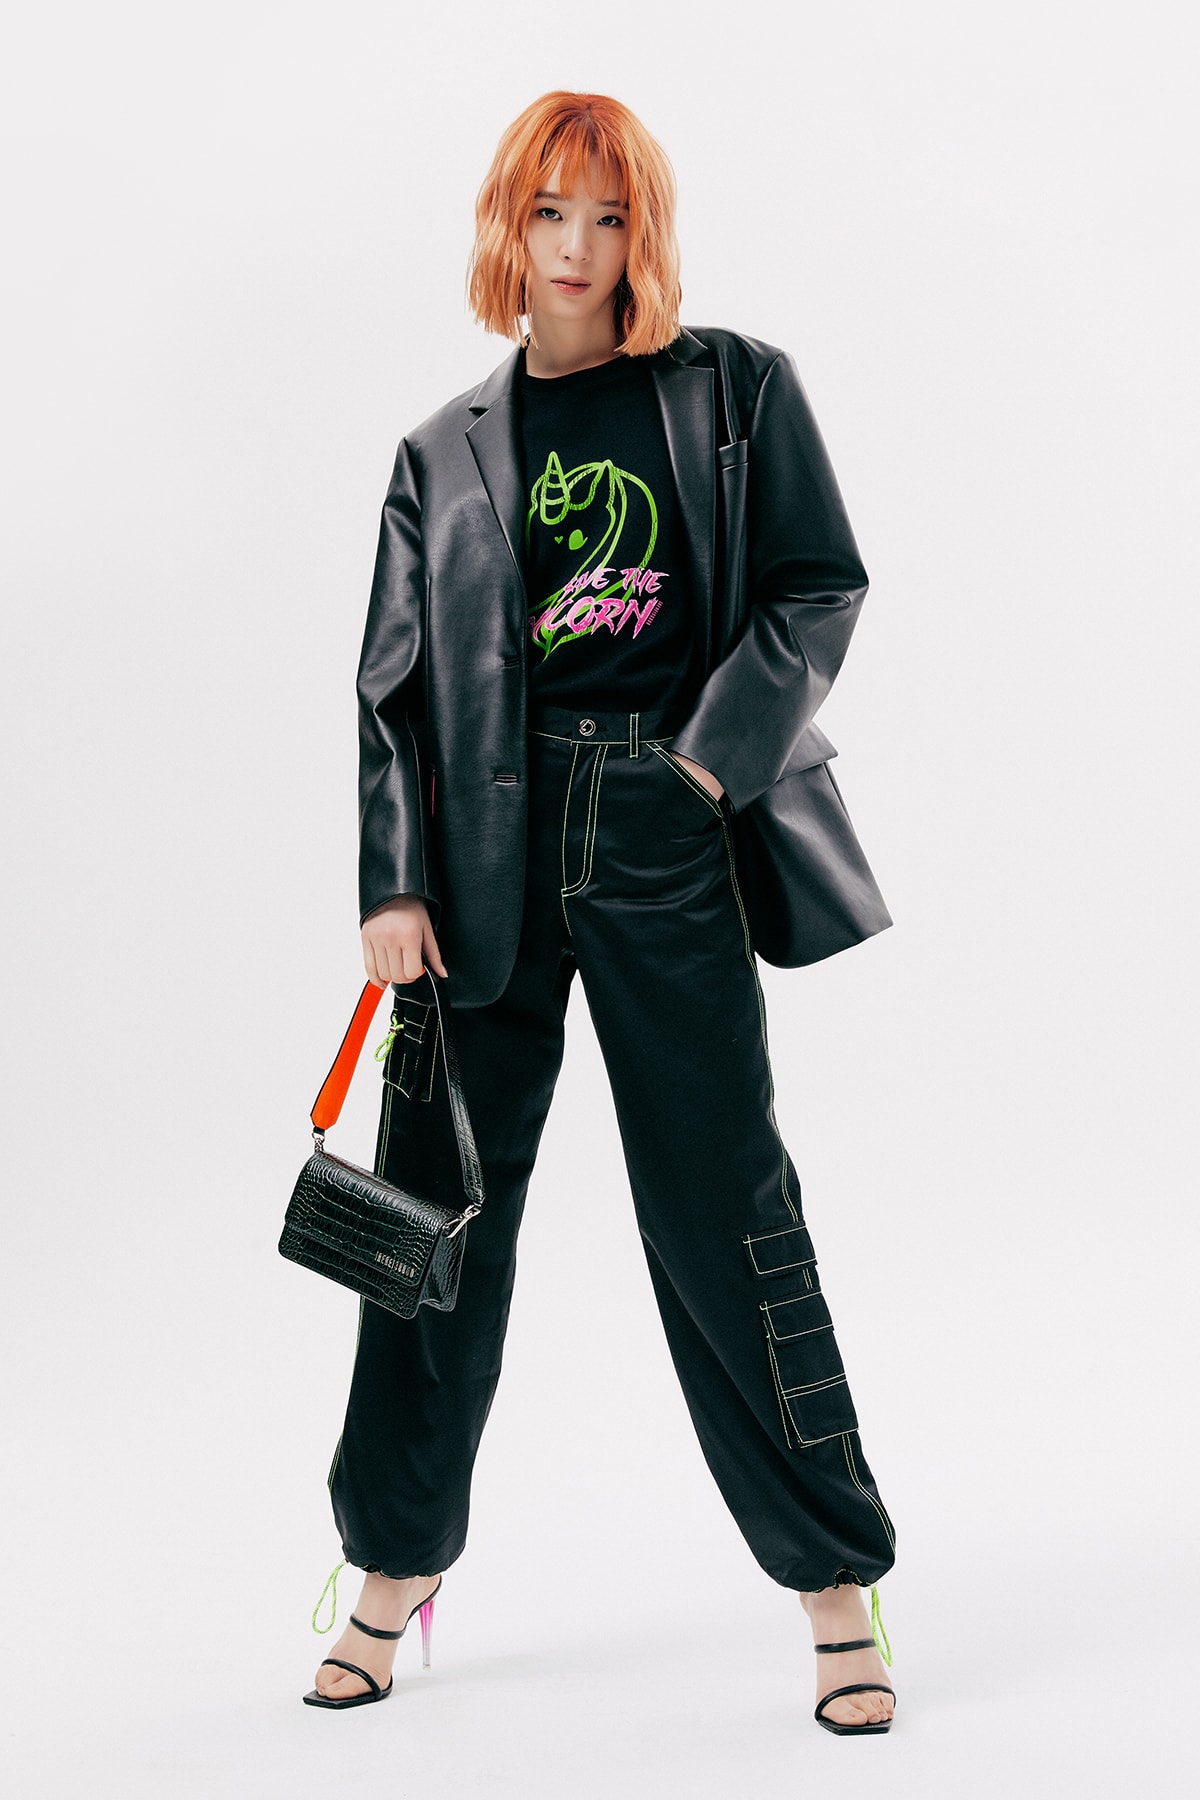 IRENEISGOOD Label Fall/Winter 2020 Collection Lookbook Leather Jacket Black